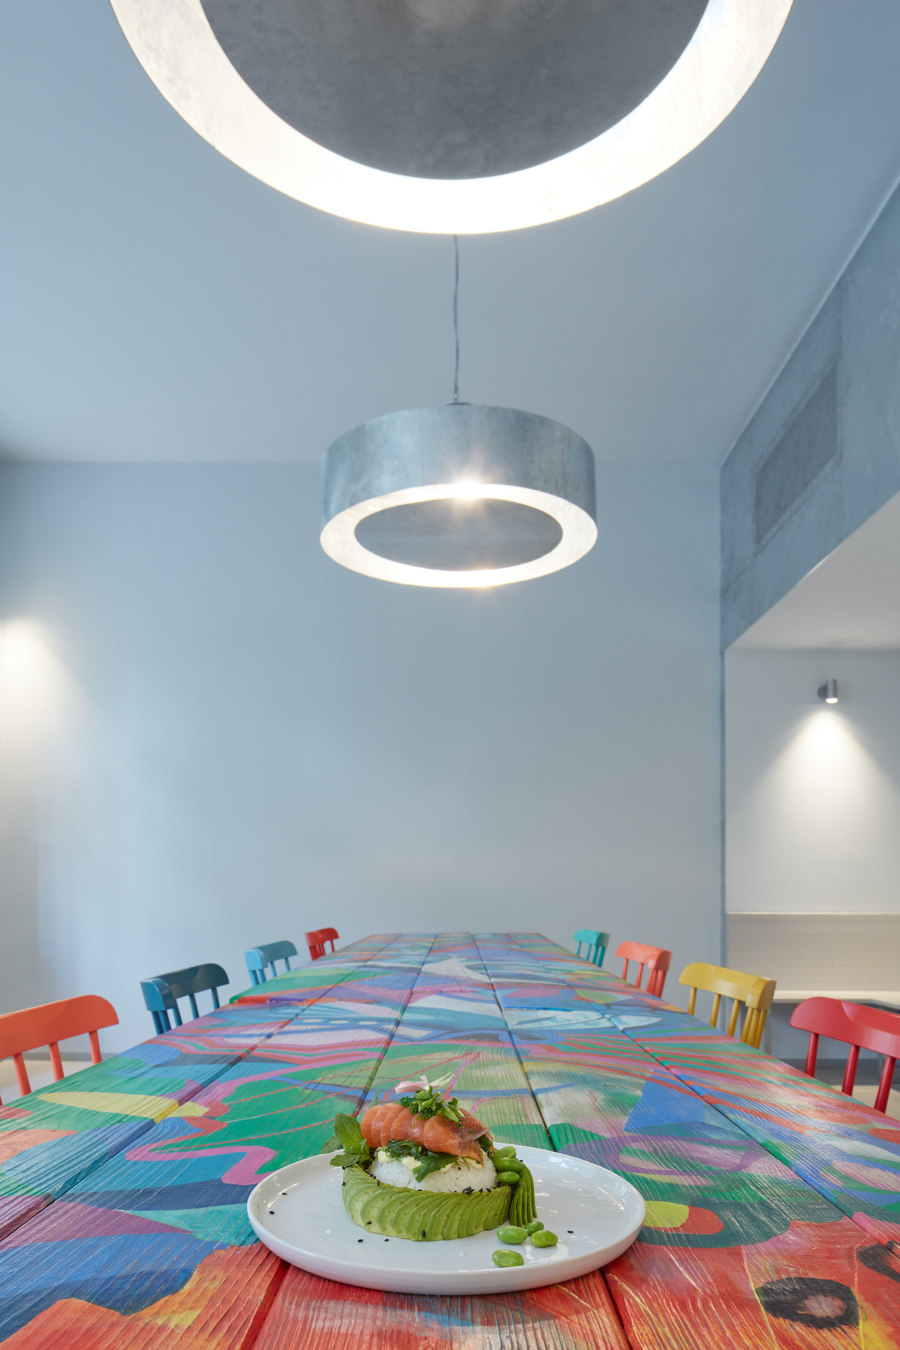 Restaurant Avocado Gang by Mimosa Architekti | Restaurant interiors